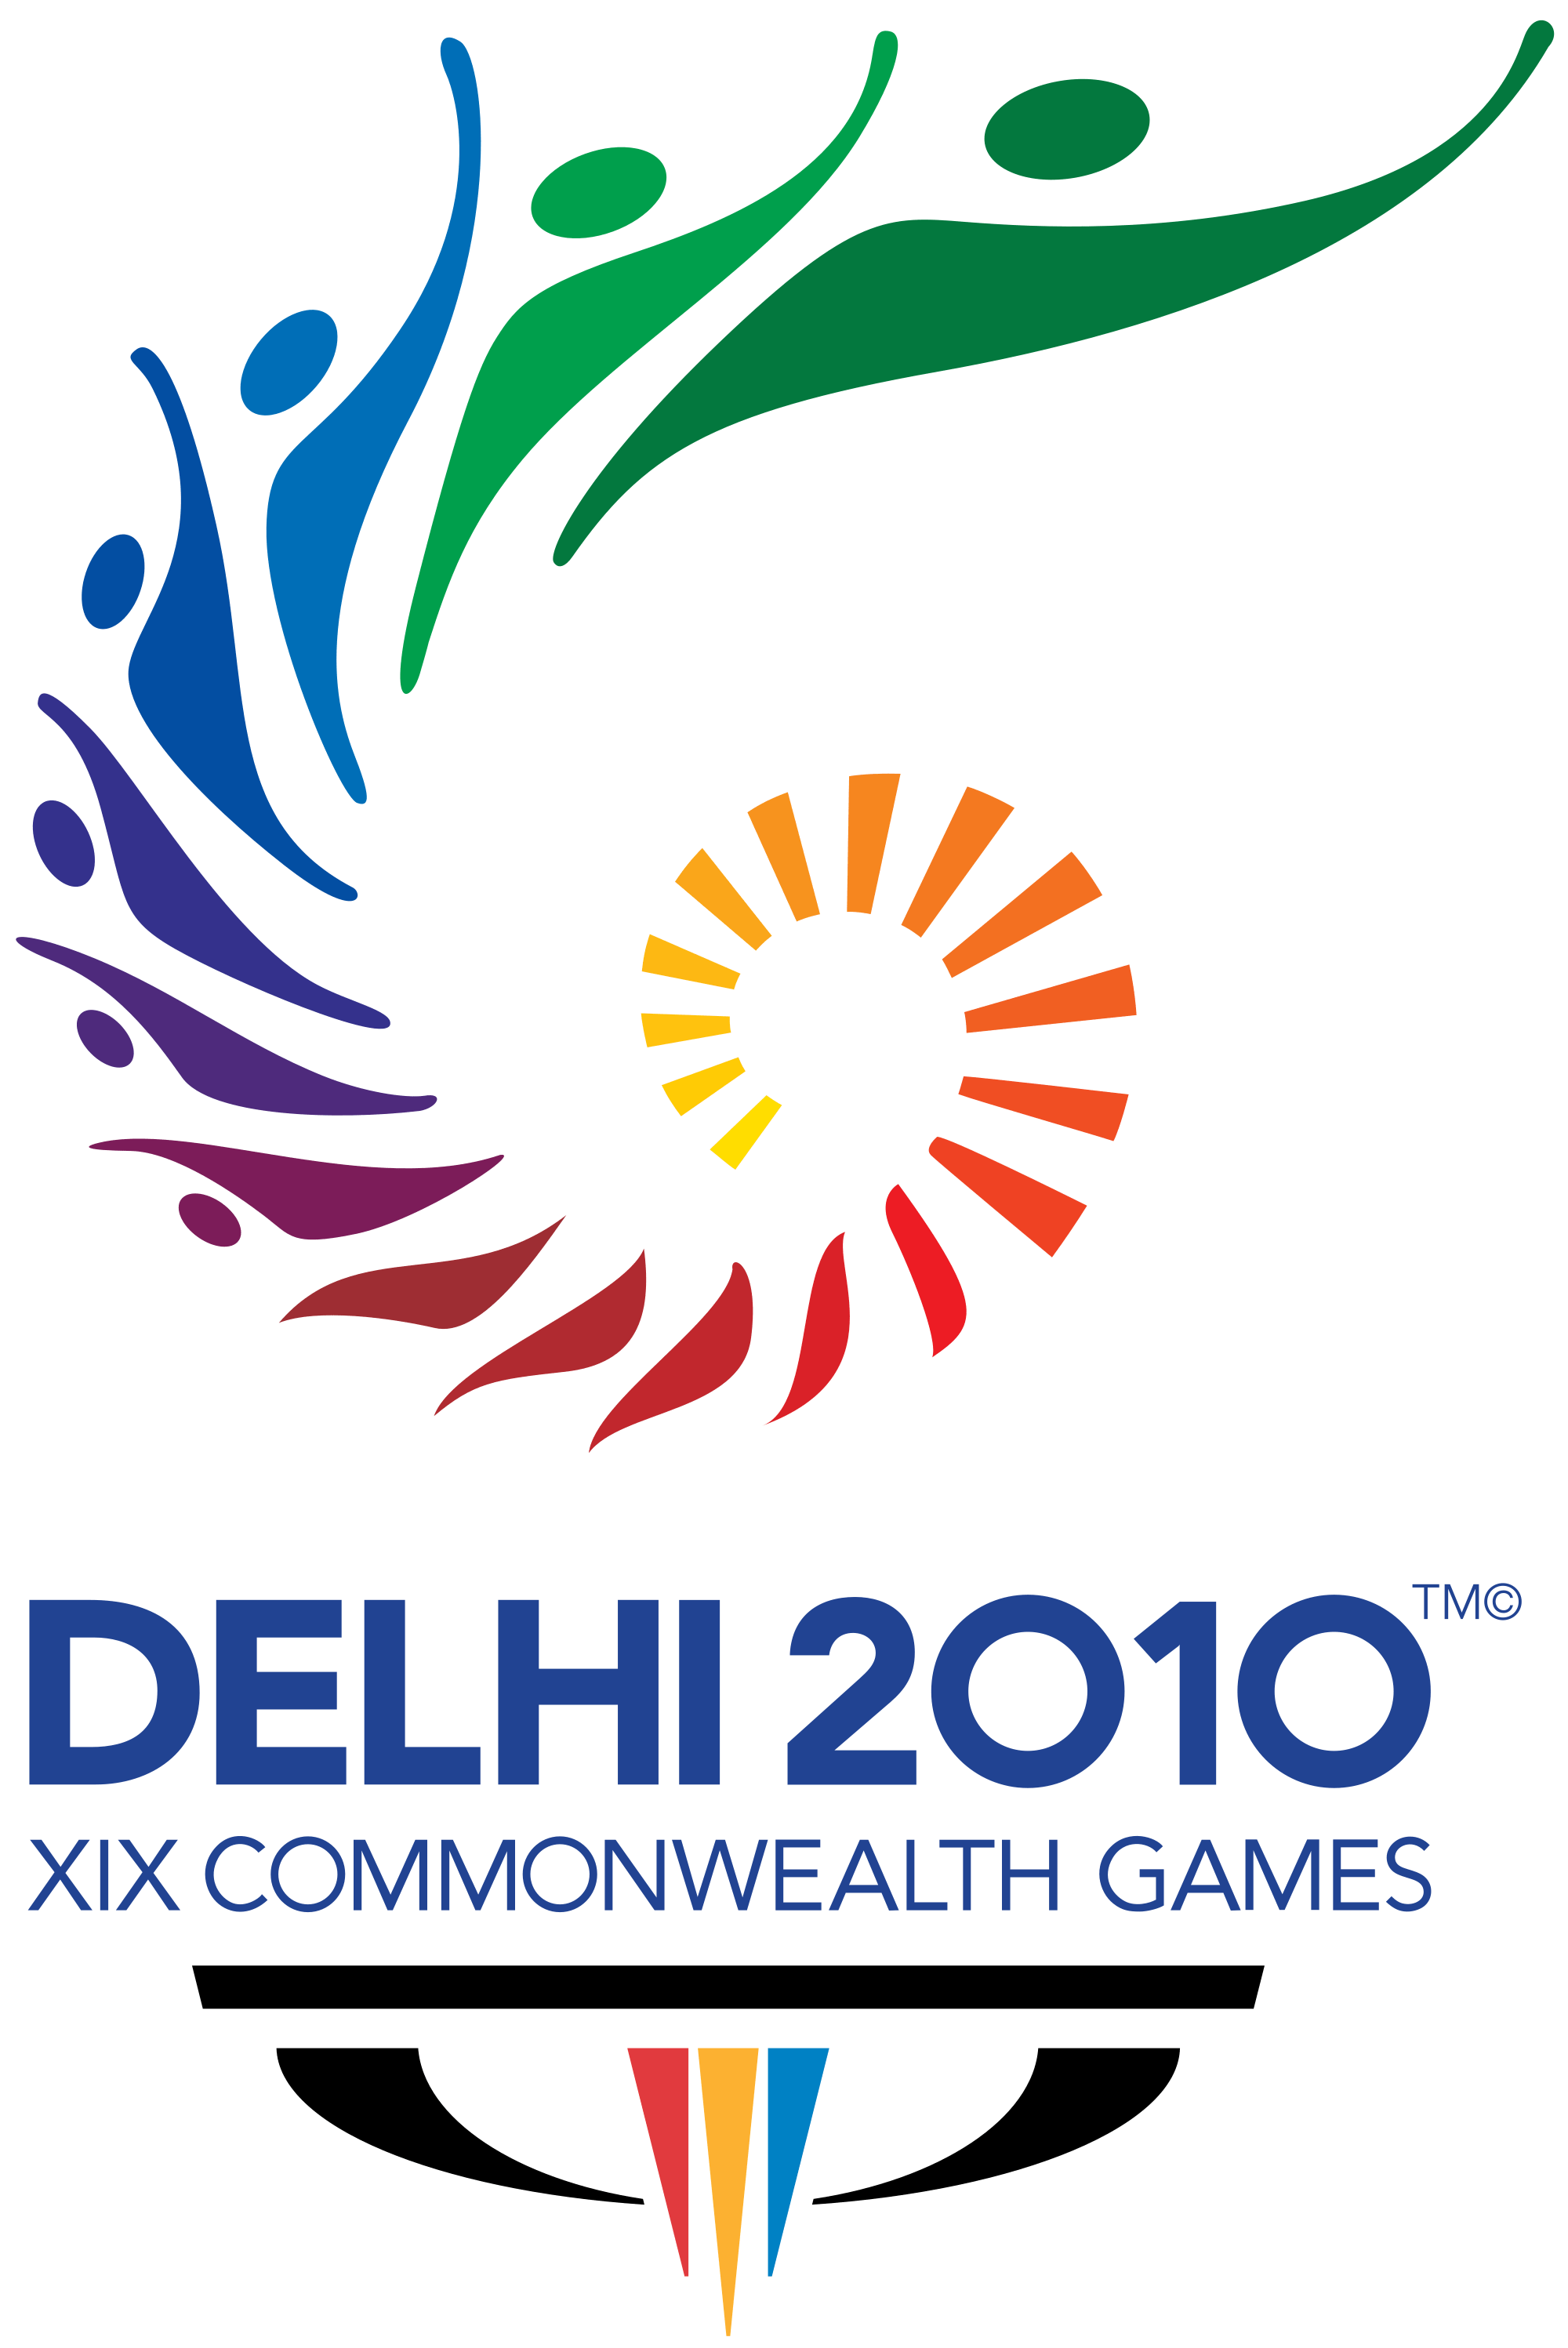 Commonwealth Logo - Delhi 2010 Commonwealth Games | SSEAYP | Commonwealth games, Game ...